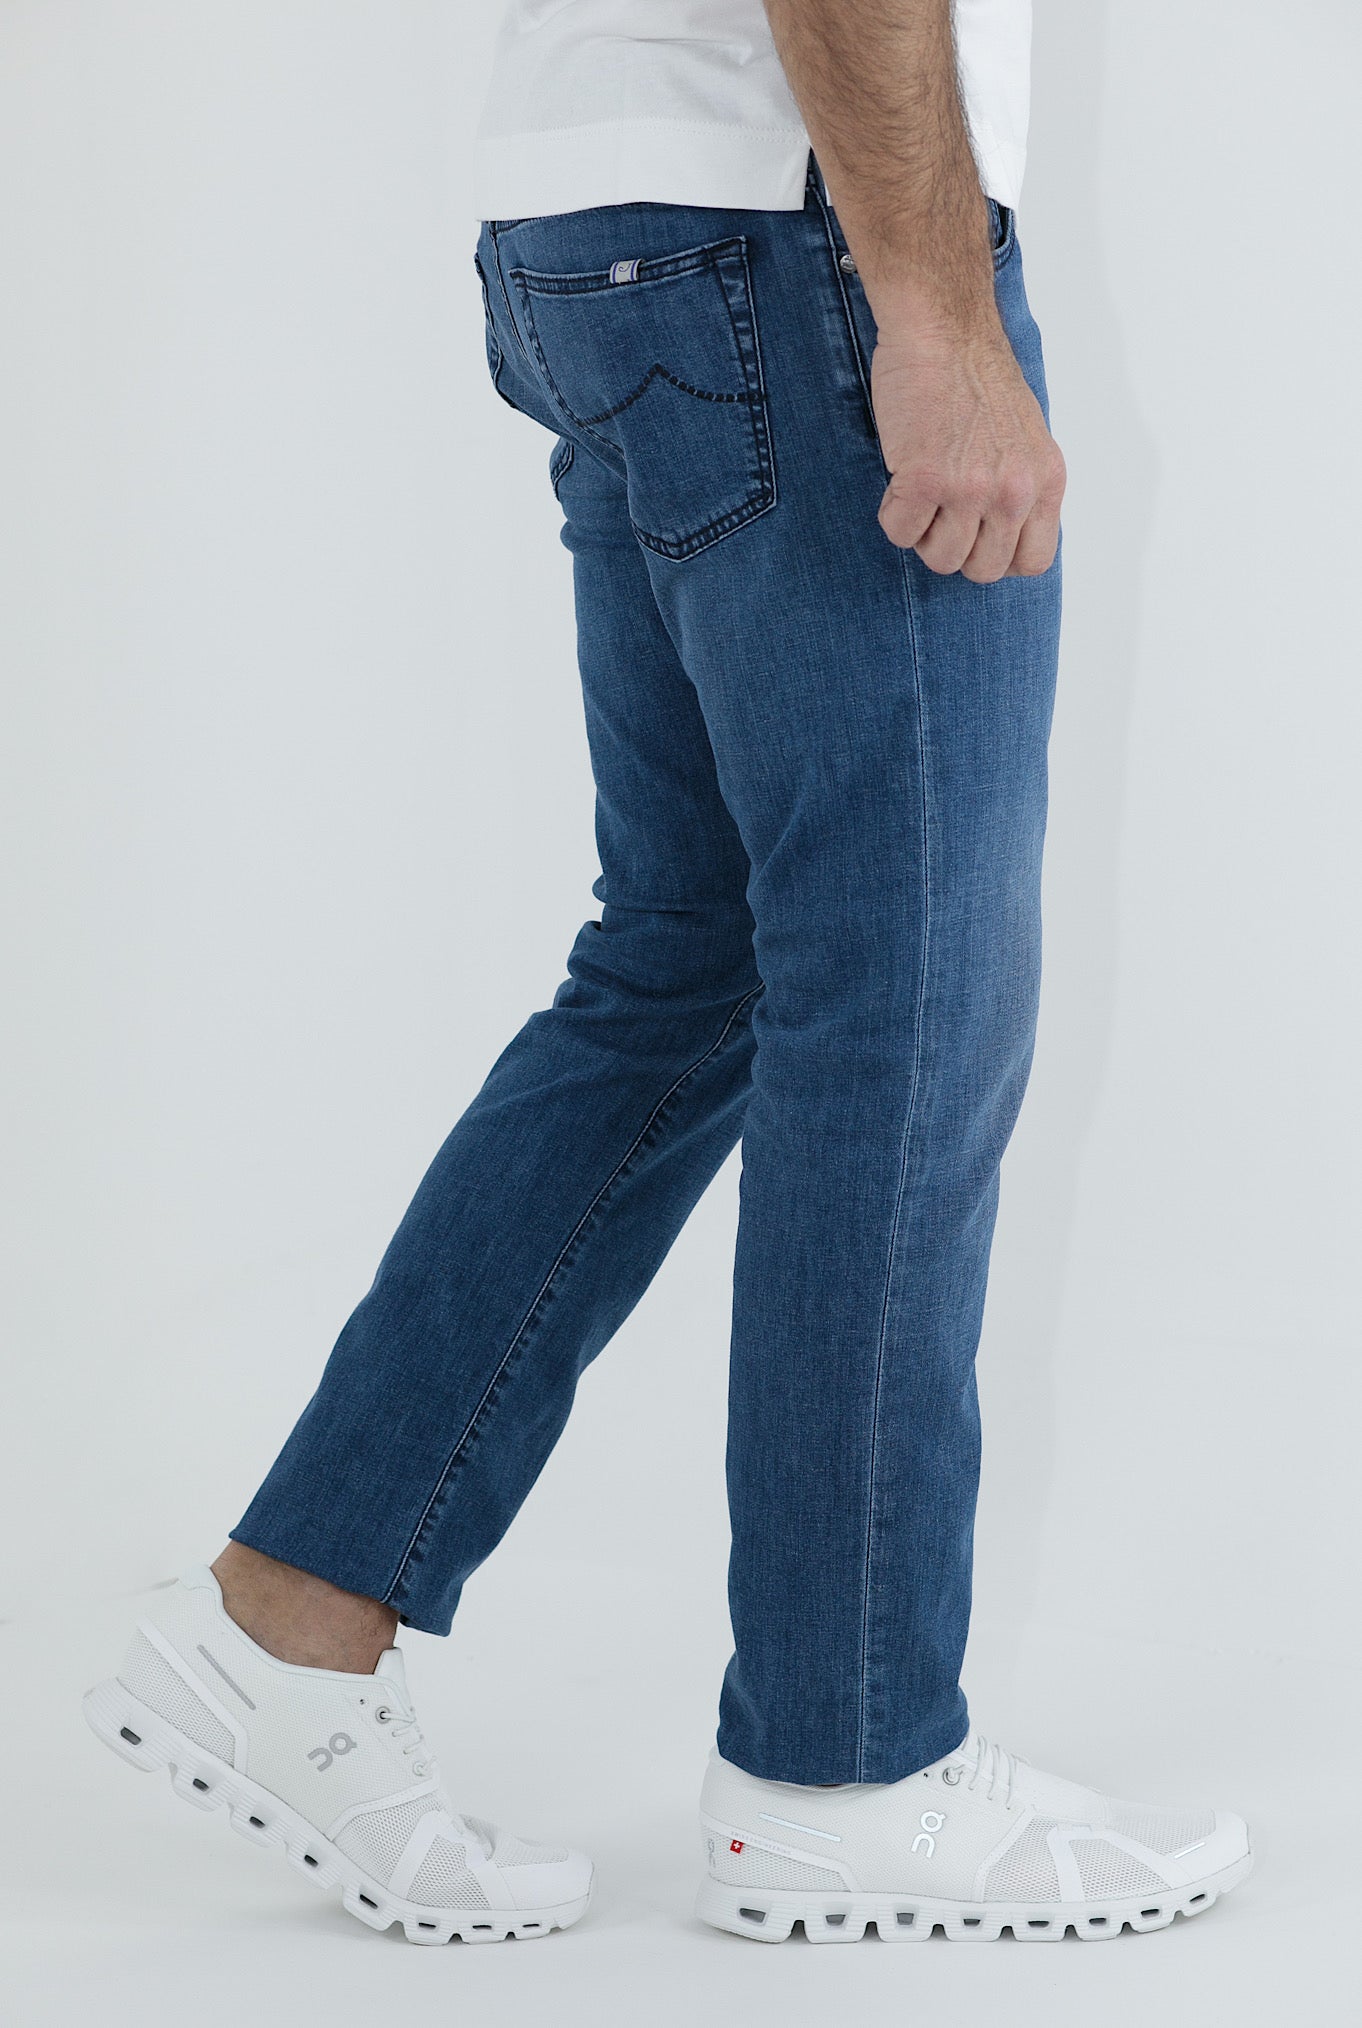 JACOB COHEN Jeans mod. Bard Denim Medio